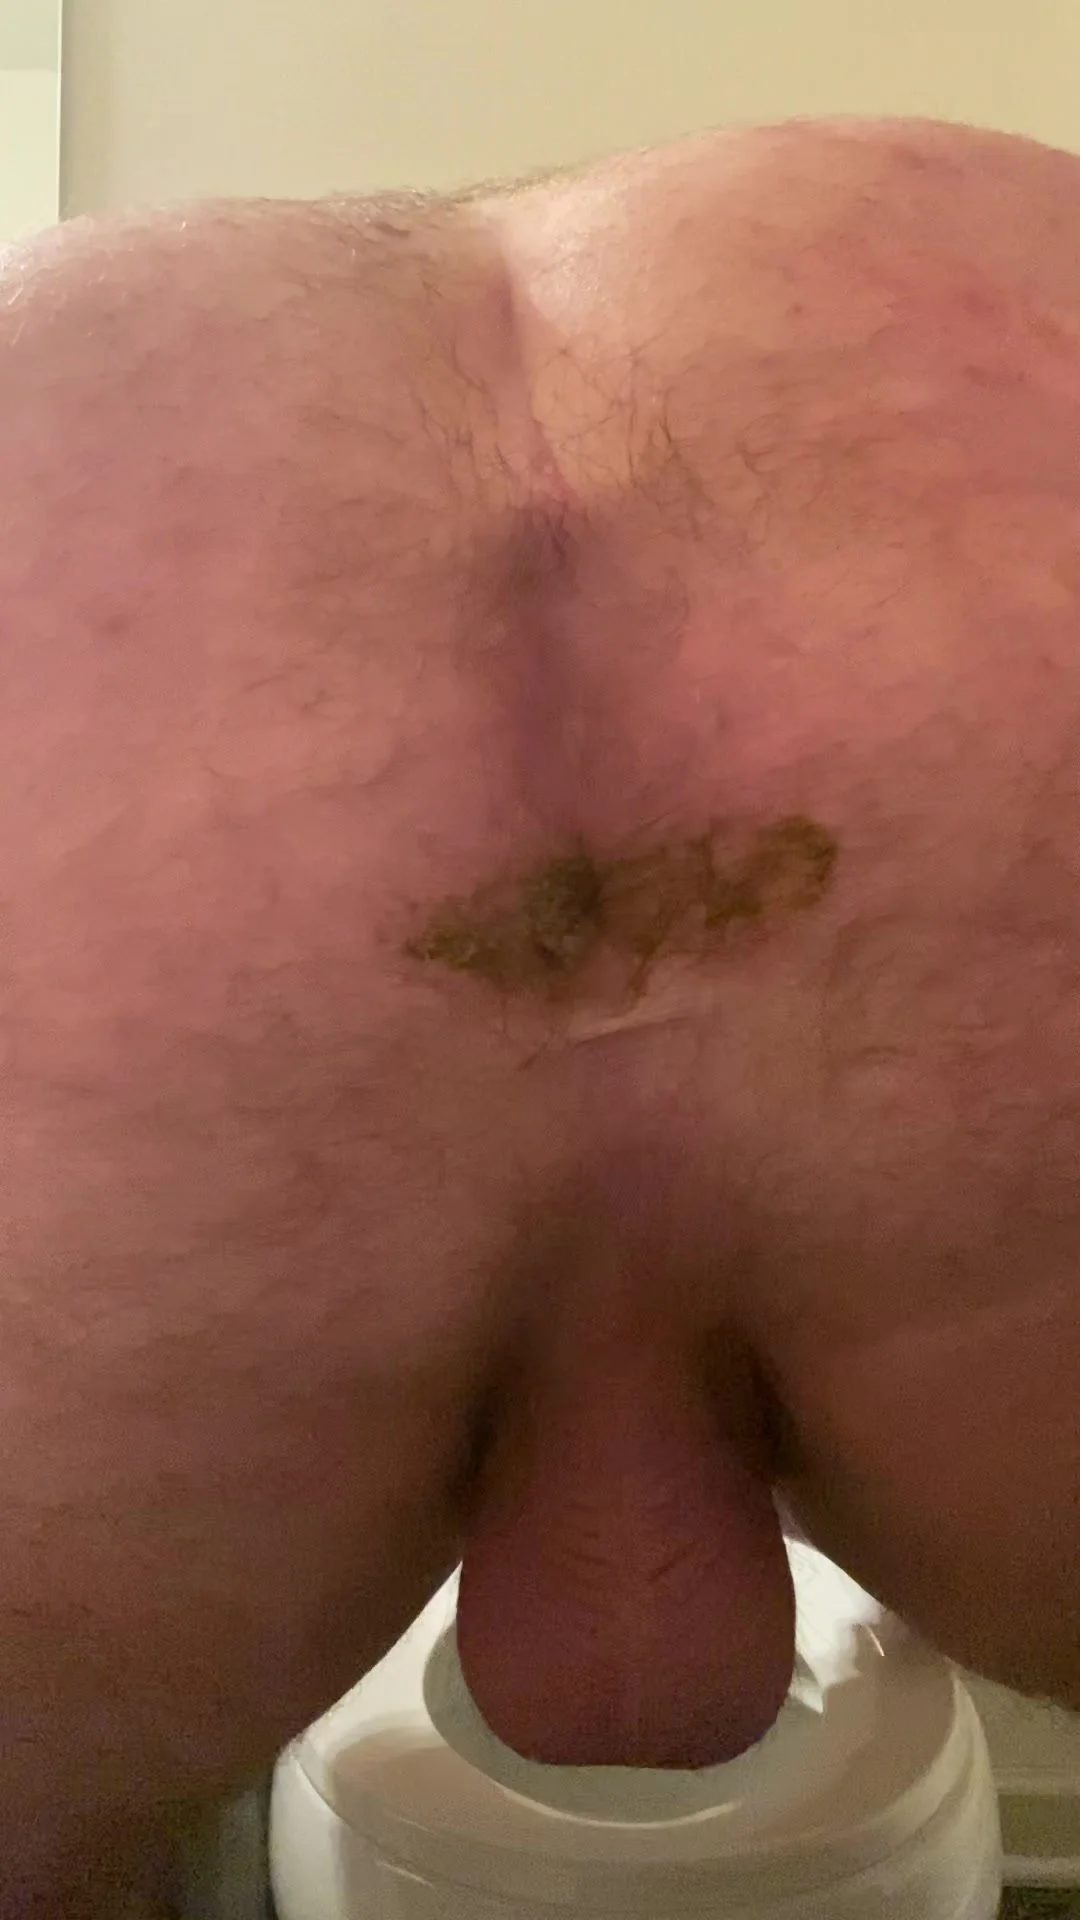 Clean my dirty butt?